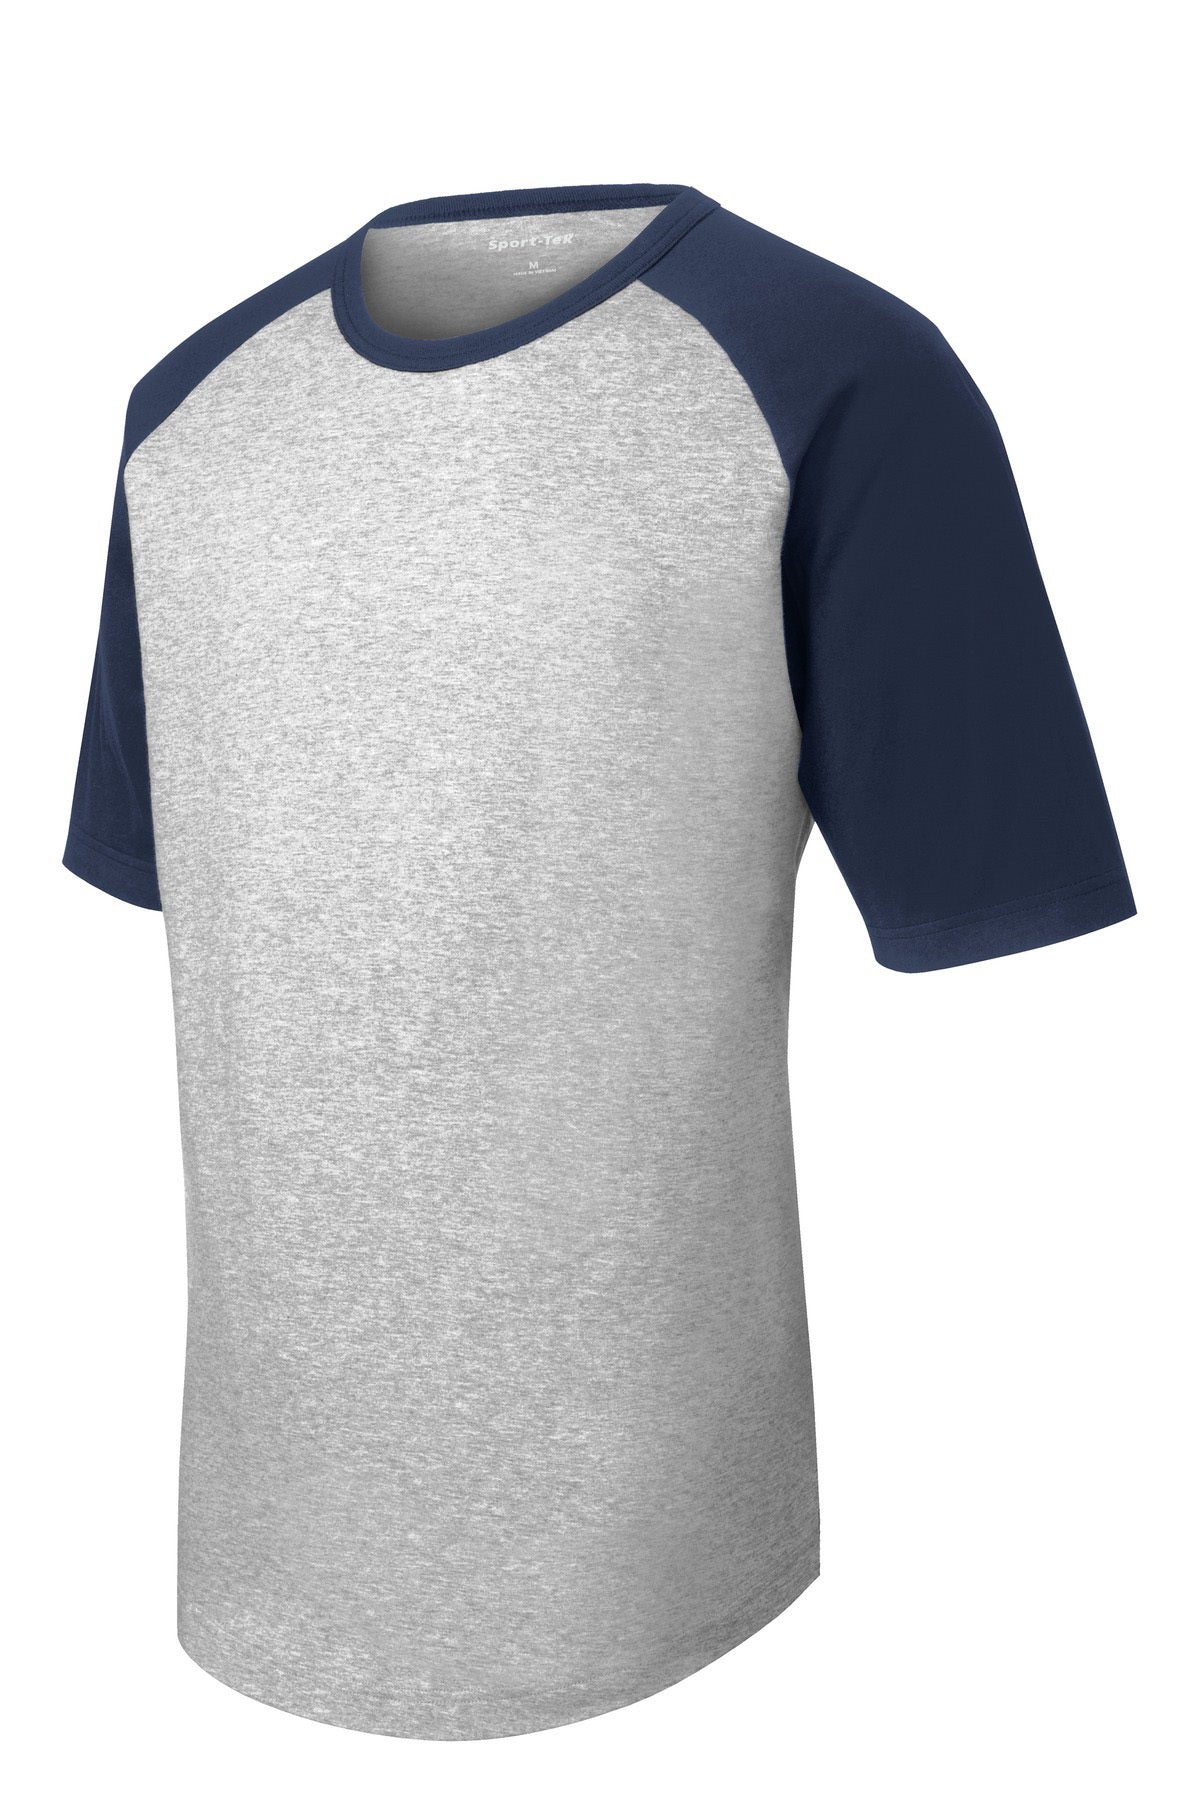 T201 Sport-Tek® Short Sleeve Colorblock Raglan Jersey